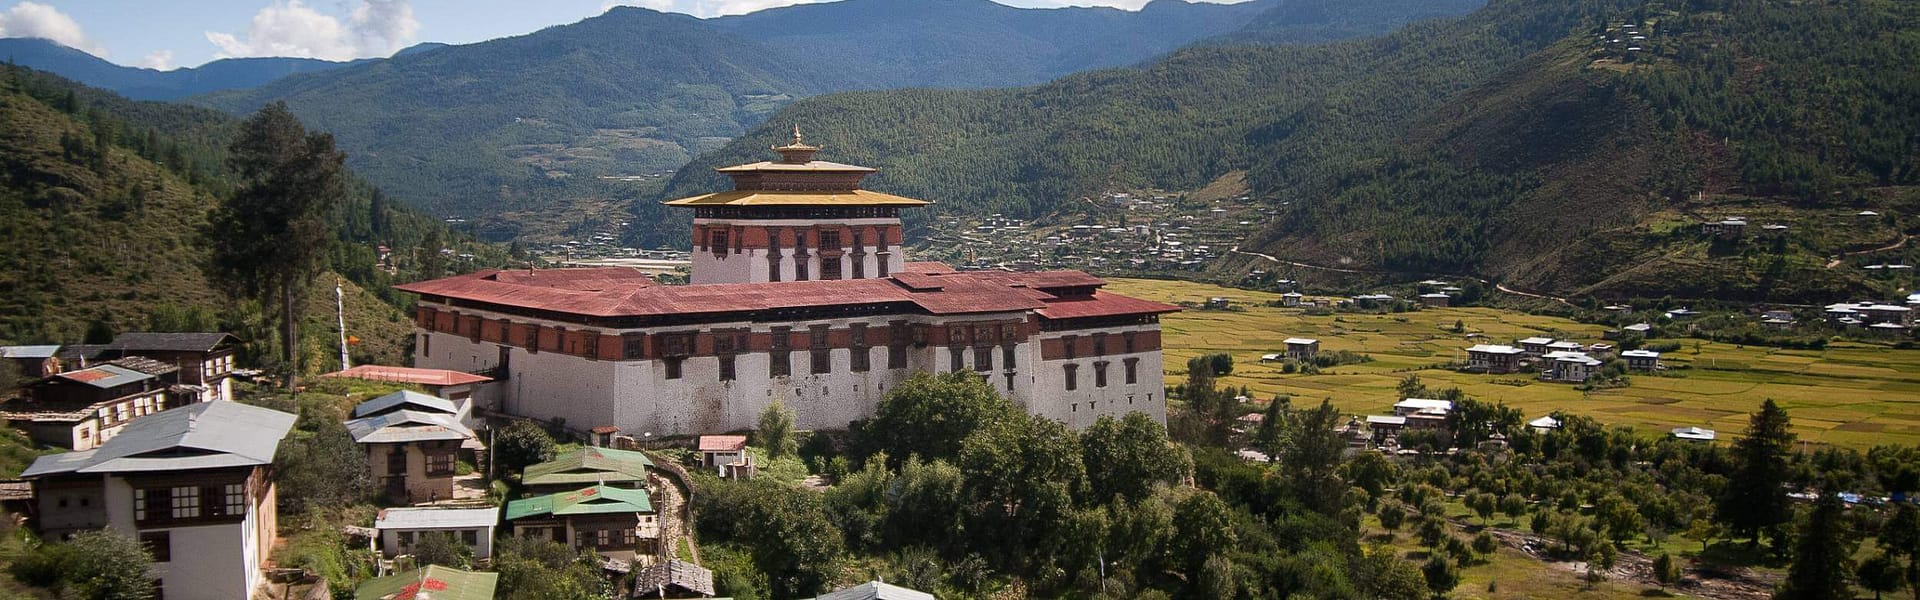 4 night 5 days Bhutan Tour